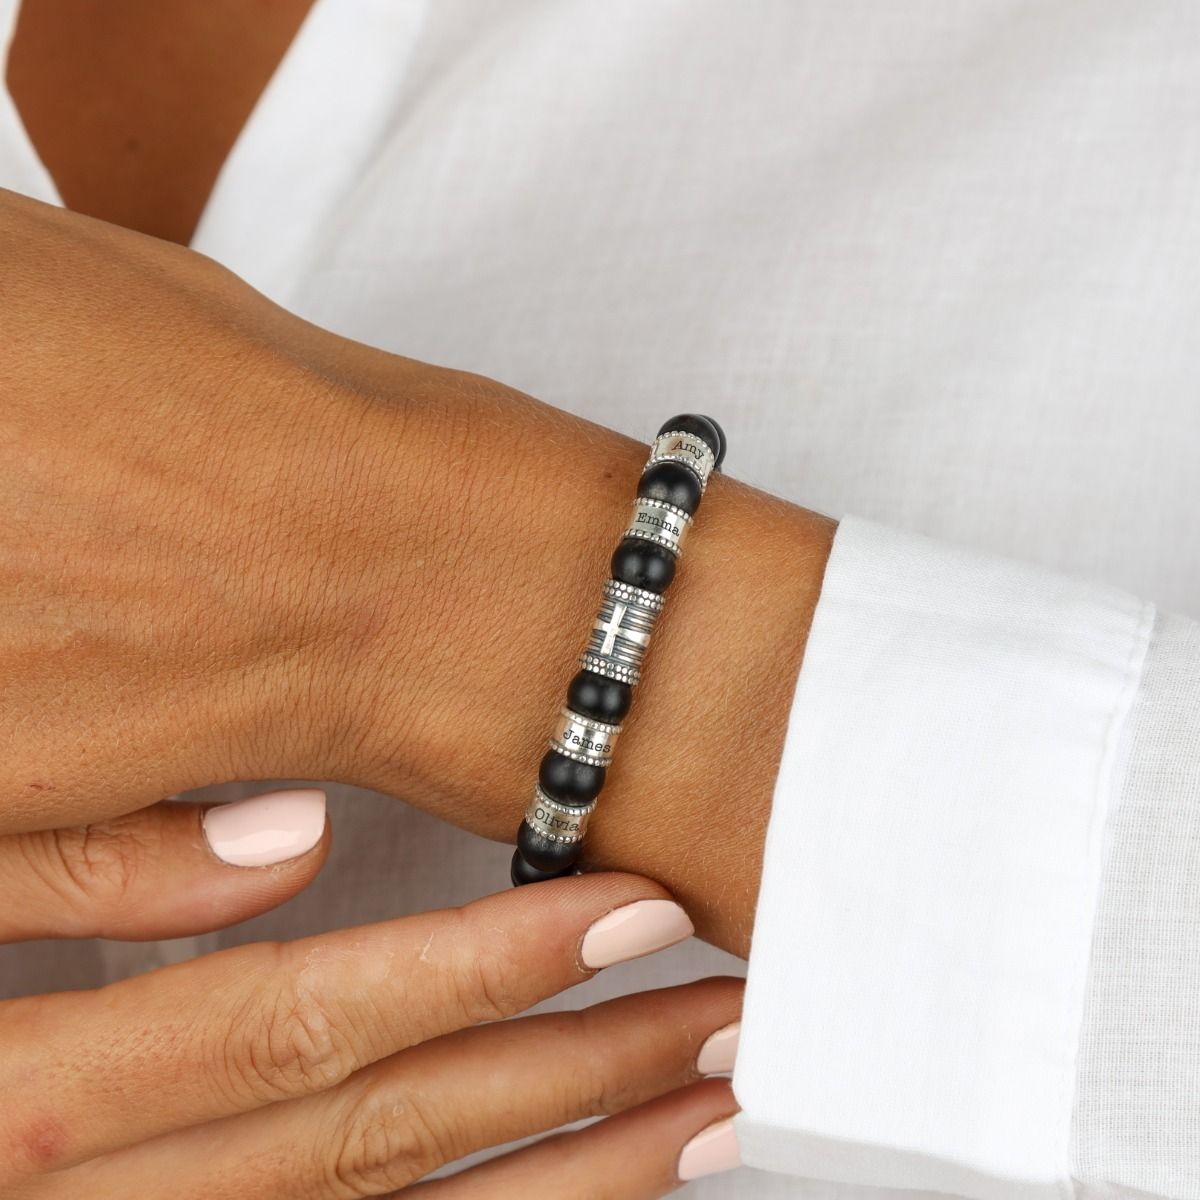 Bright Black Onyx Healing Yoga Gemstone Bracelet Sterling Silver Cross -  GEM+SILVER